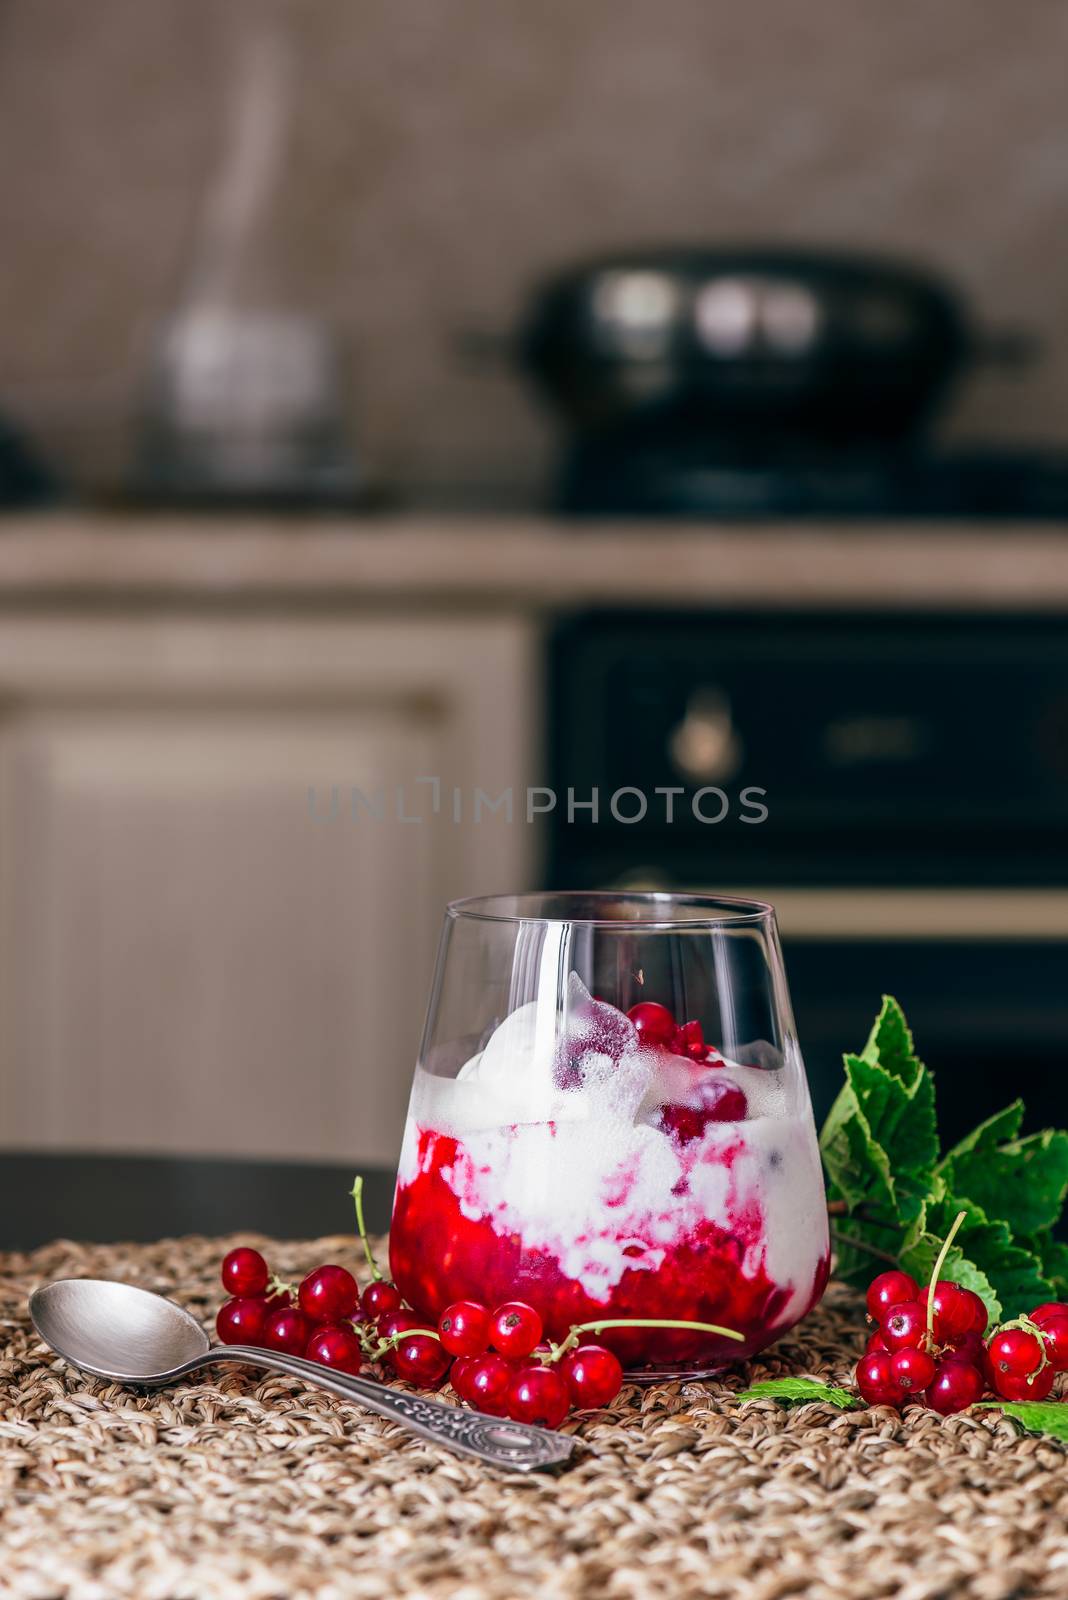 Ice Cream Dessert with Red Currant. by Seva_blsv